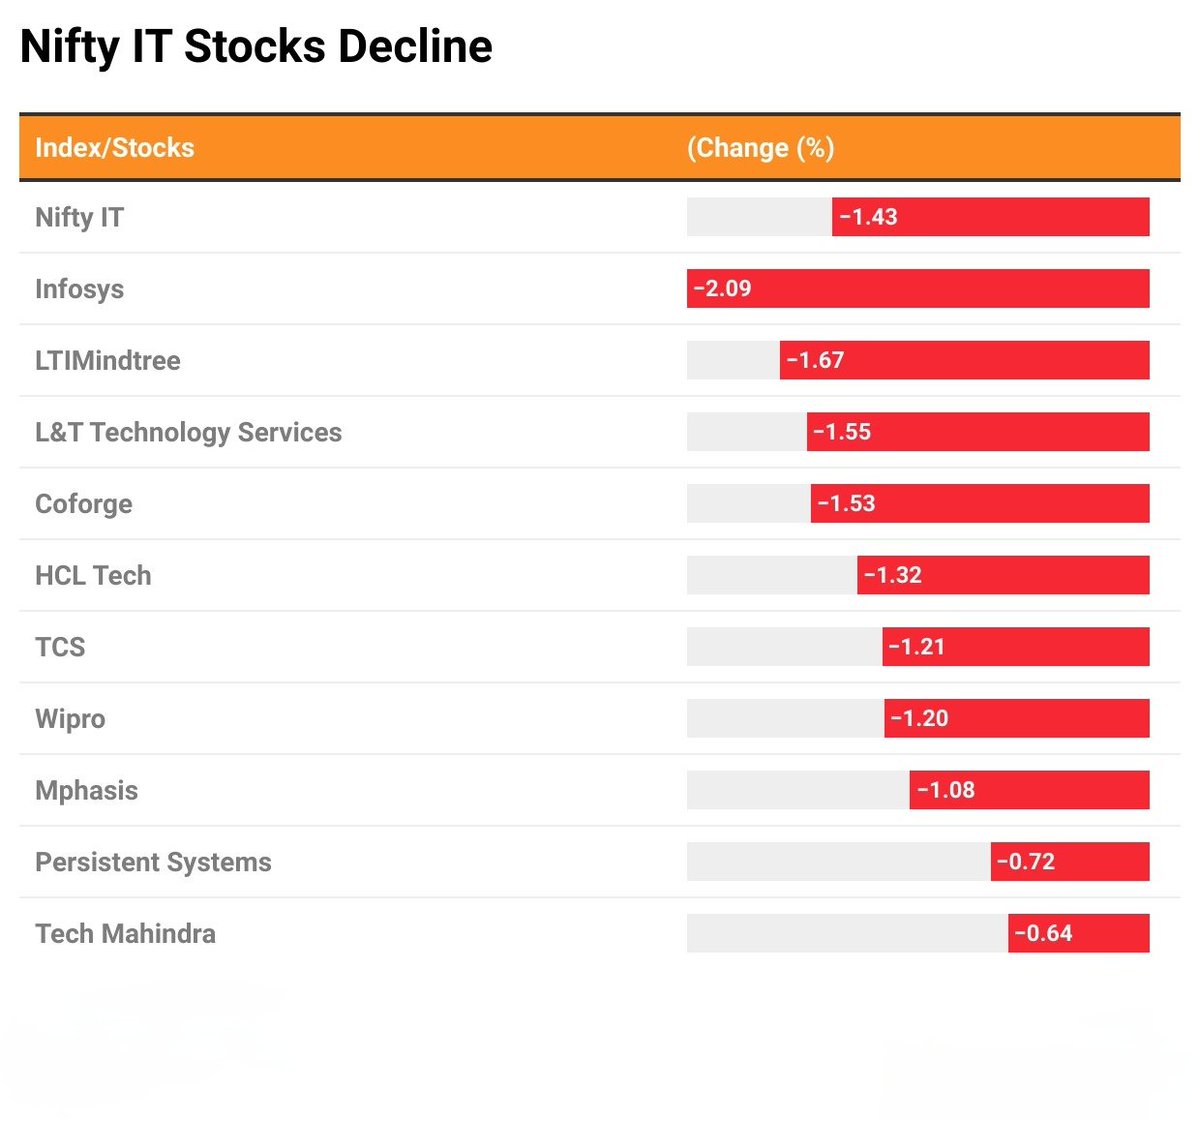 #NiftyIT stocks decline.
#stockmarkets #StockInNews #stocks #nifty #niftyit #Infosys #LTtech #hcltech #tcs #Wipro #tcs #mphasis #techmahindra